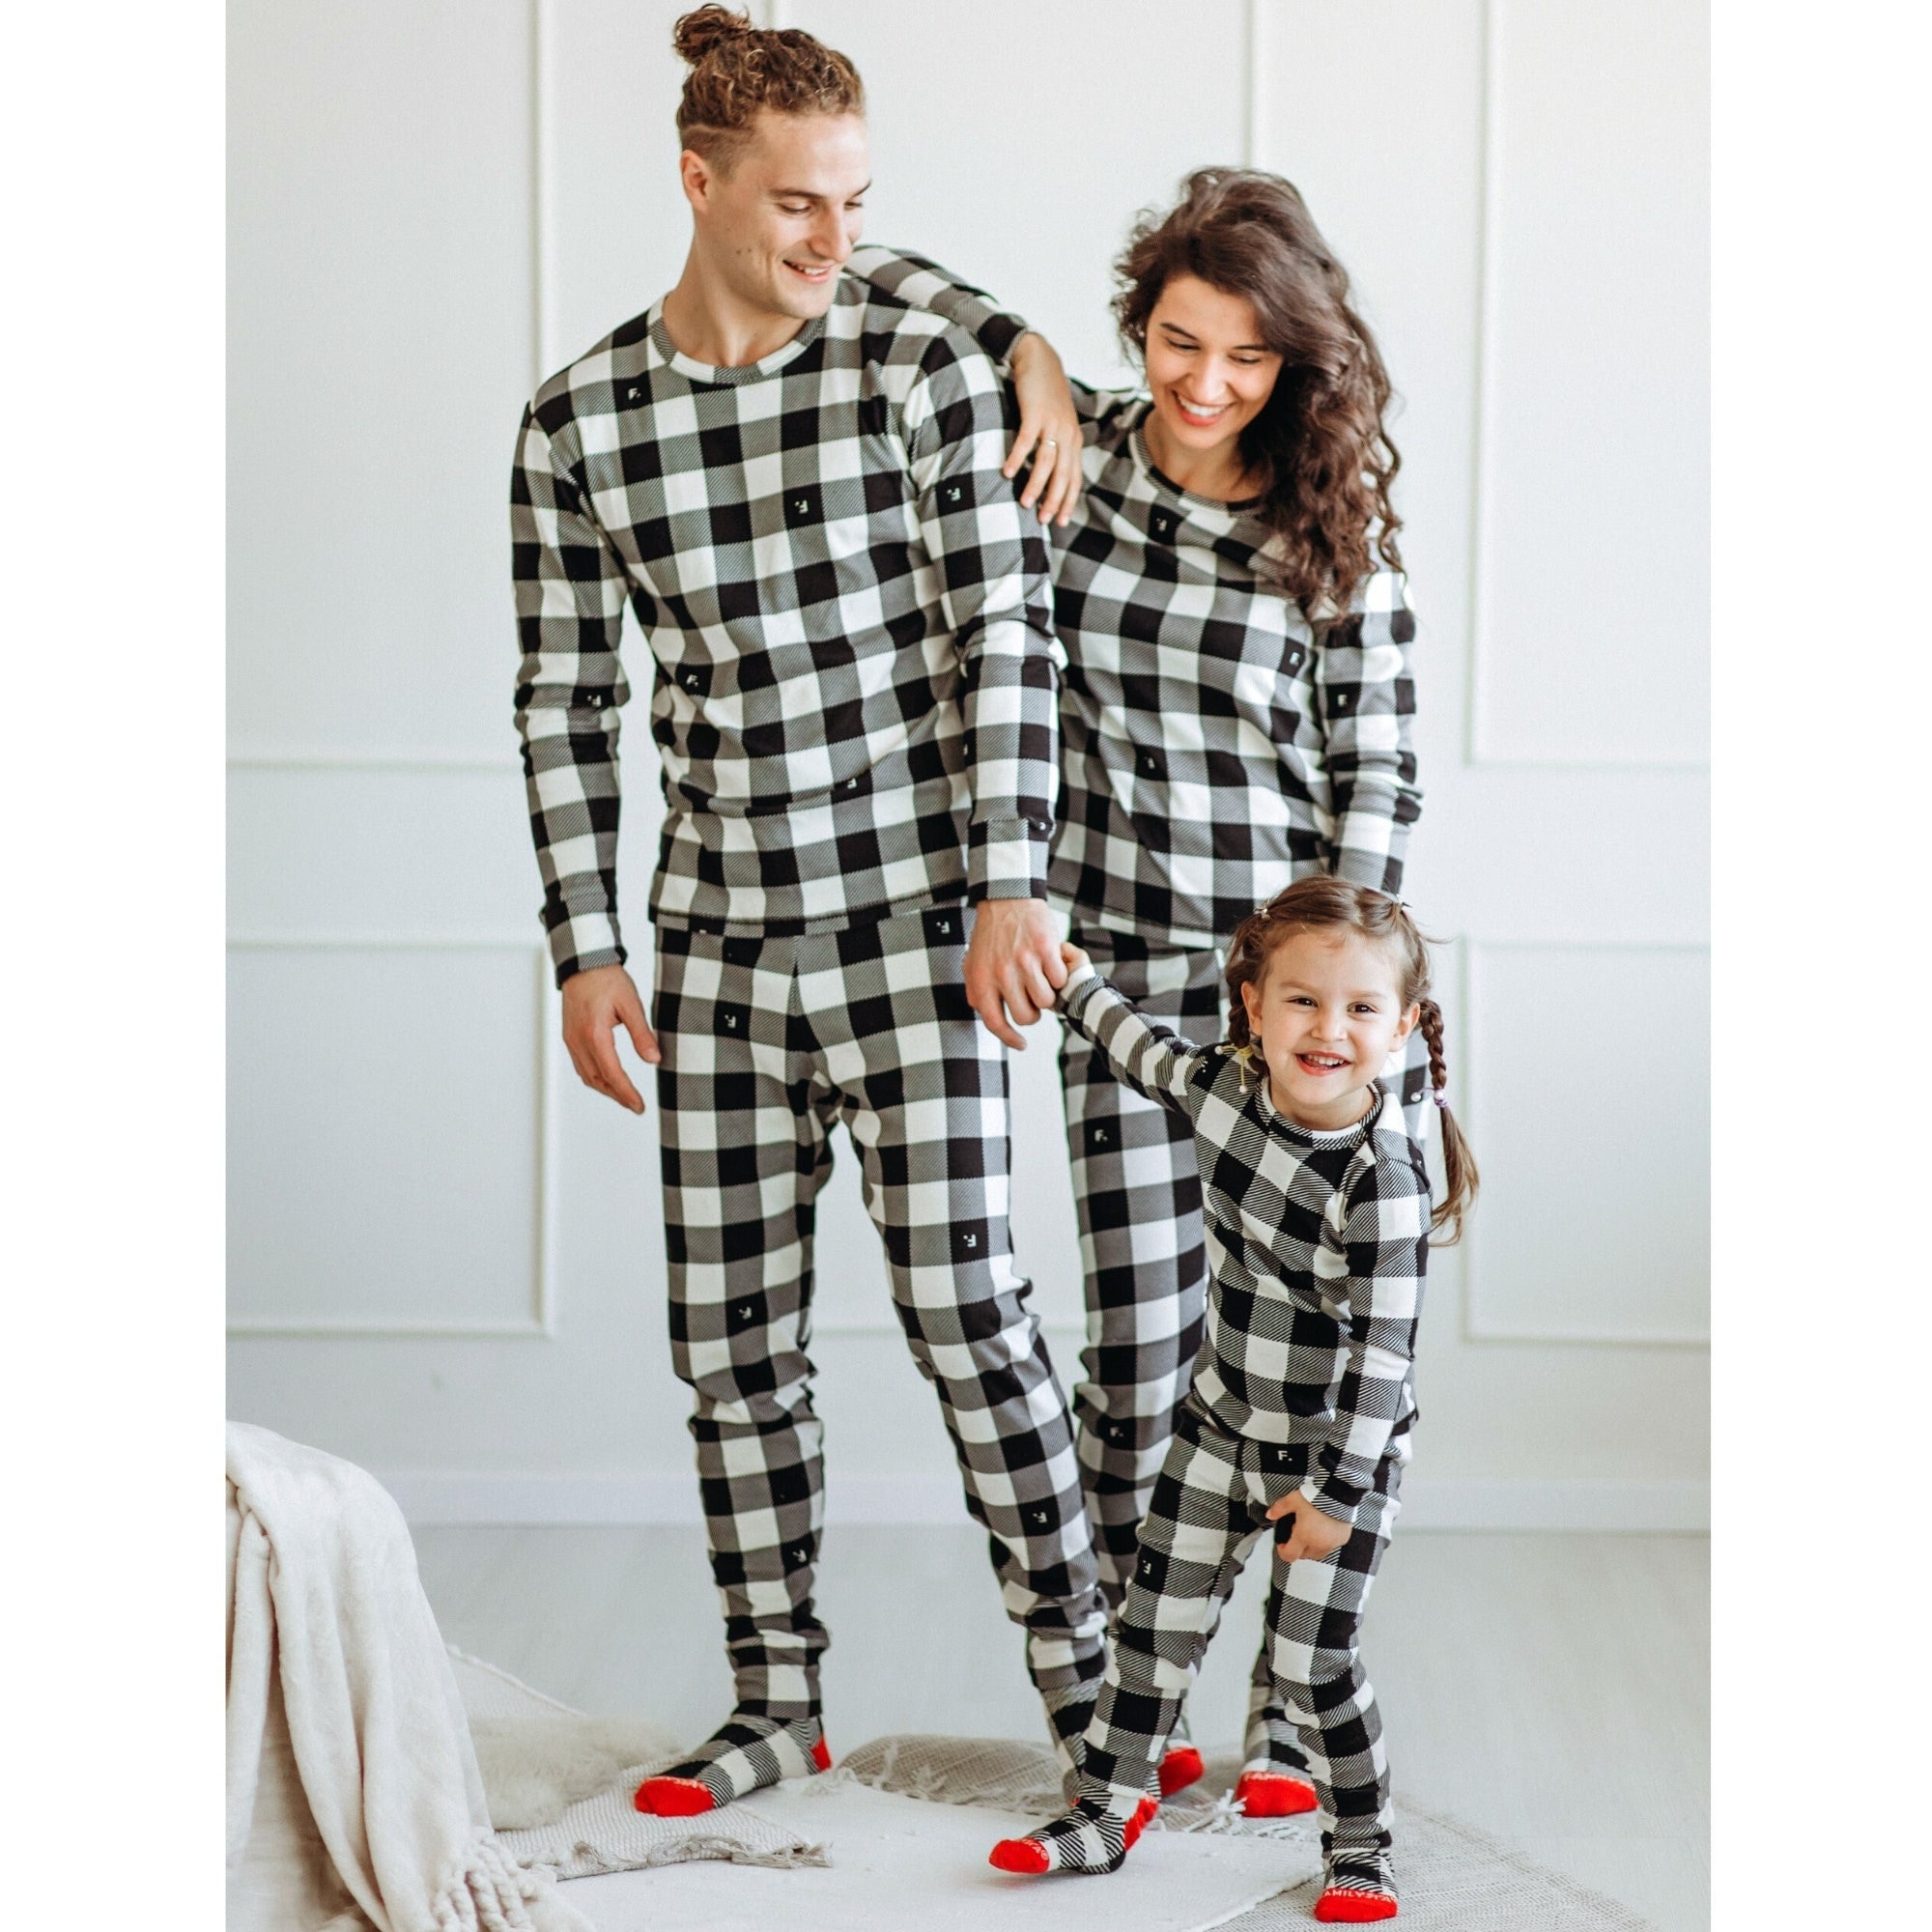 Buy Matching Pajamas Online In India -  India